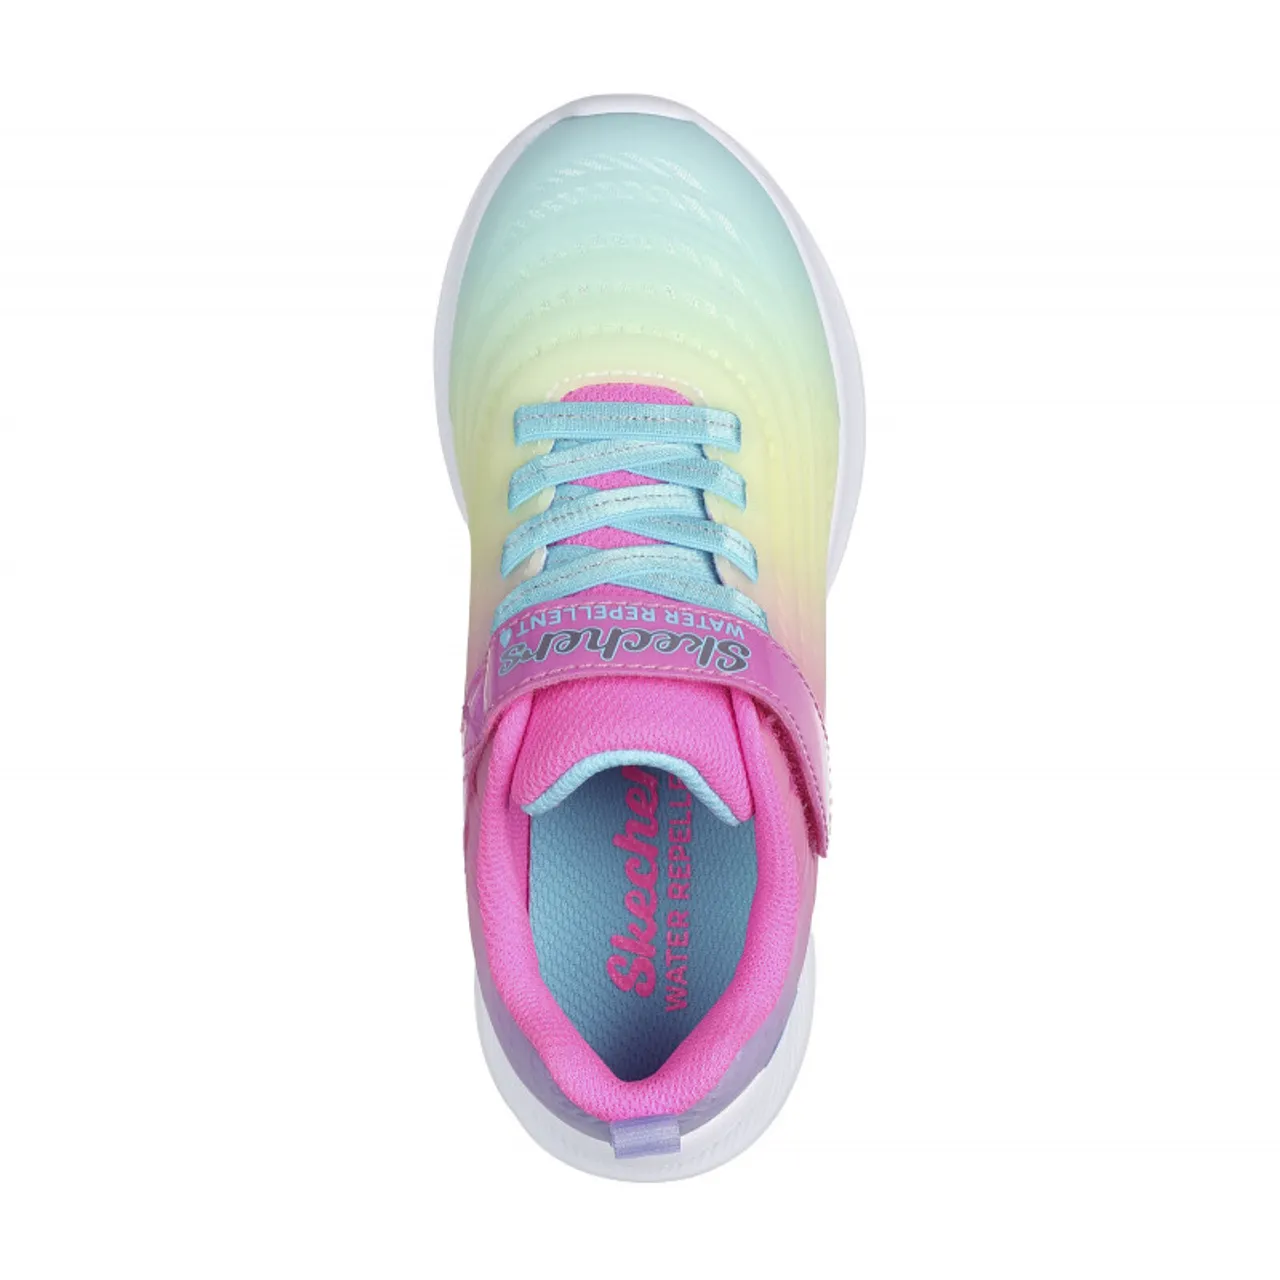 Skechers Jumpsters 2.0 - Blurred Dream - Schuhe - Kind Pink / Mint 30